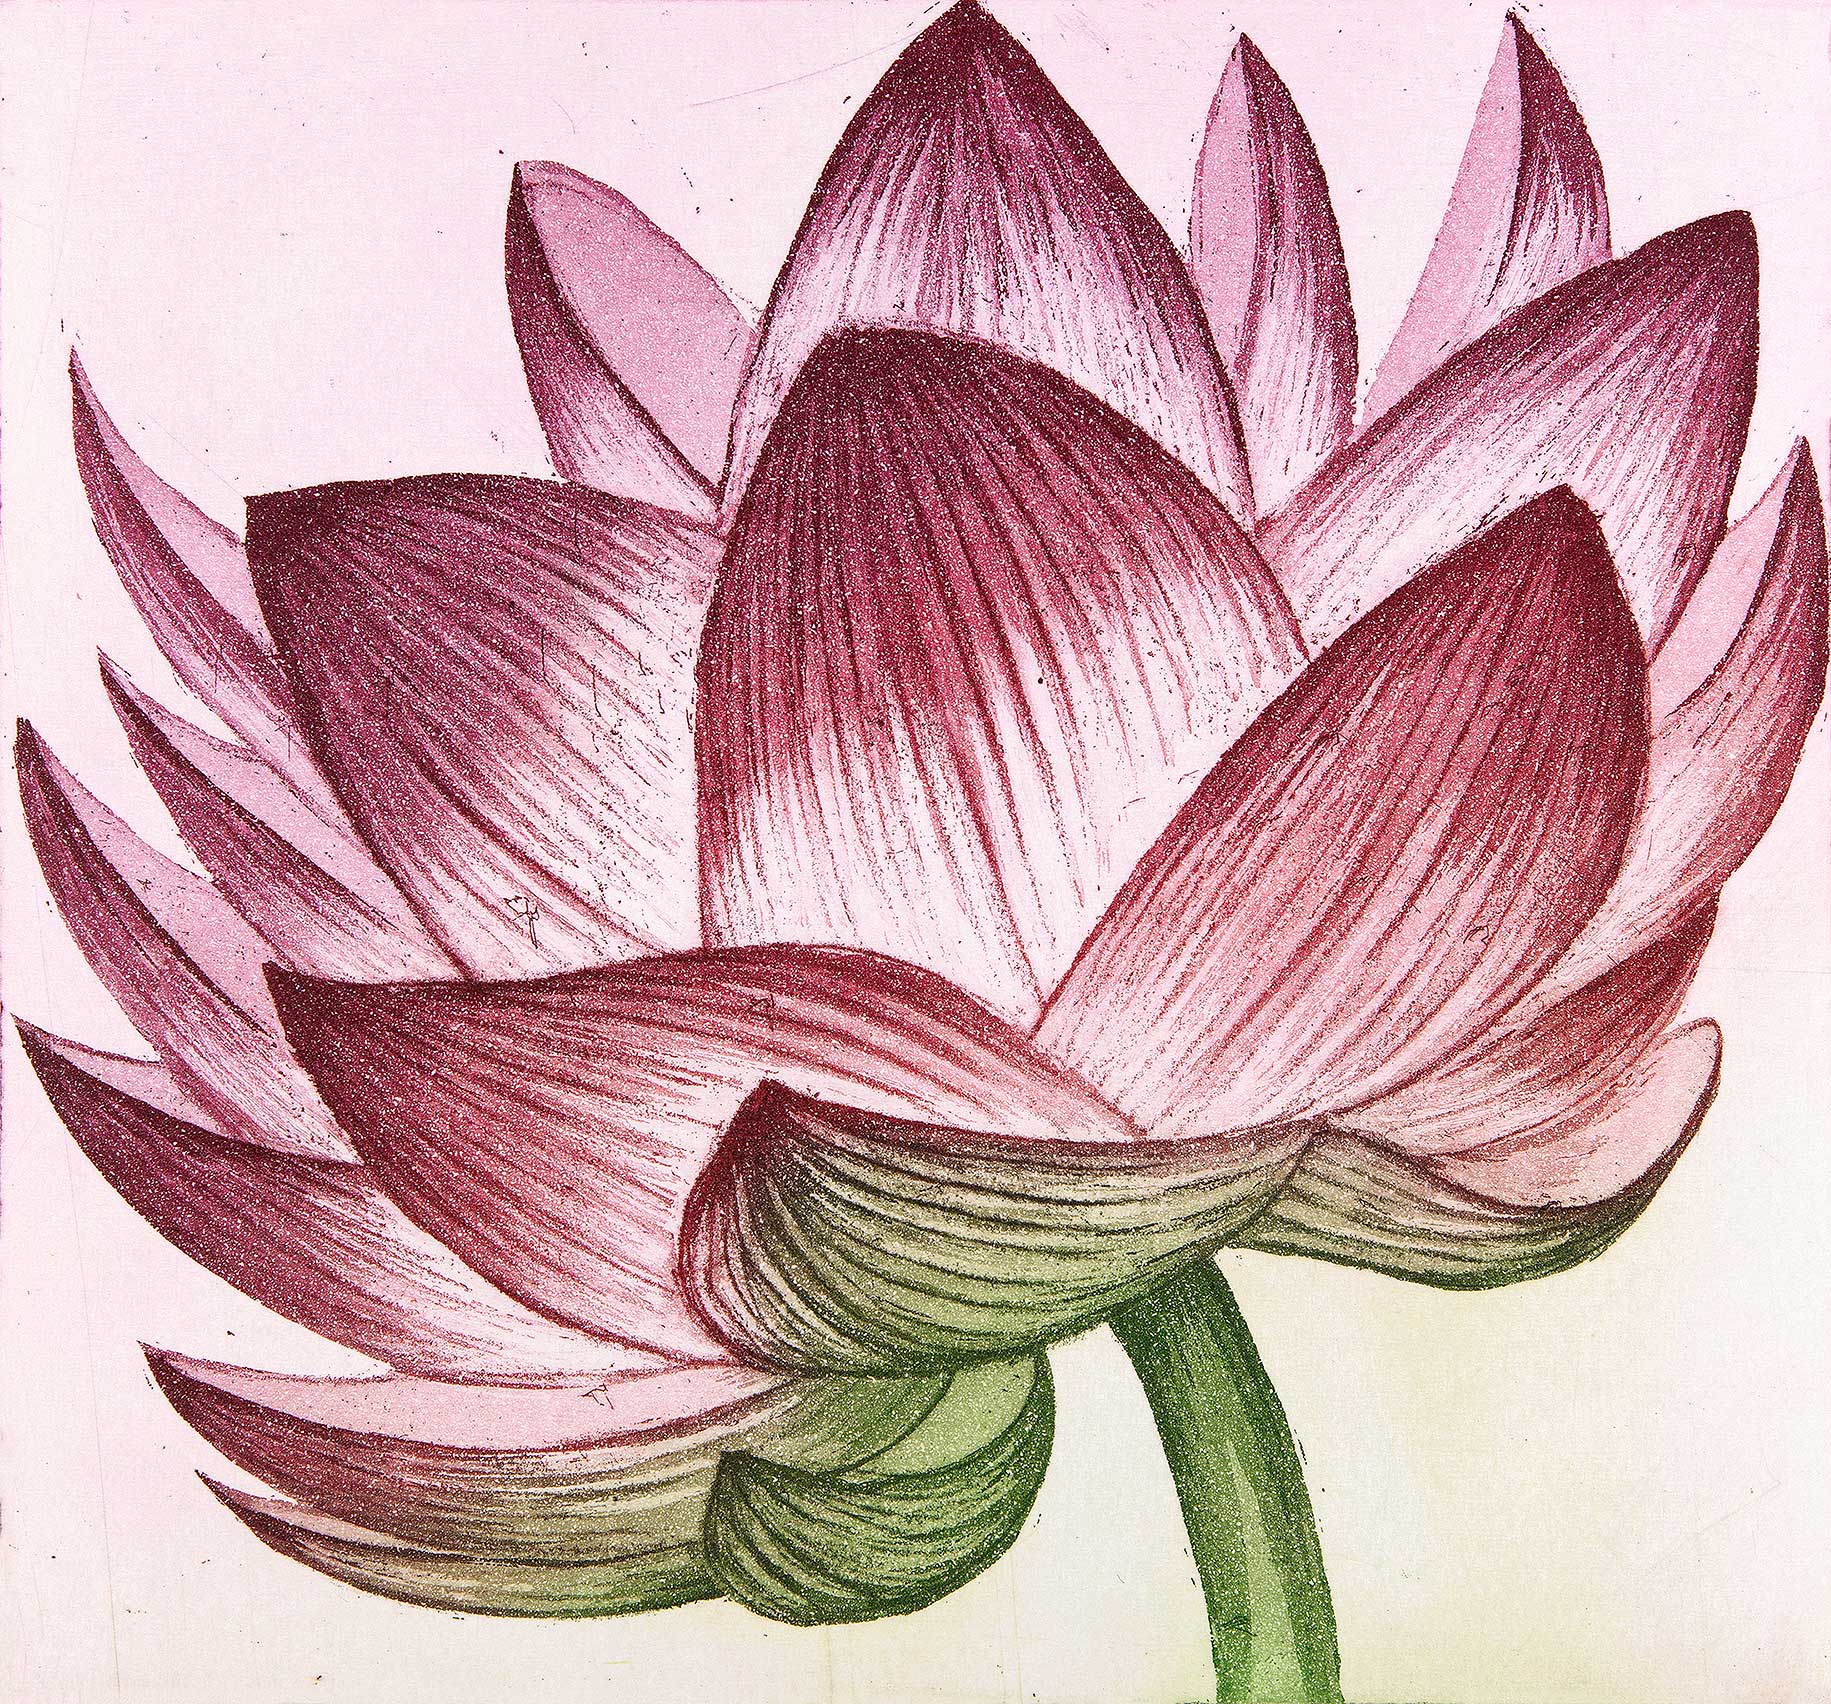 'Lotus' by Morna Rhys